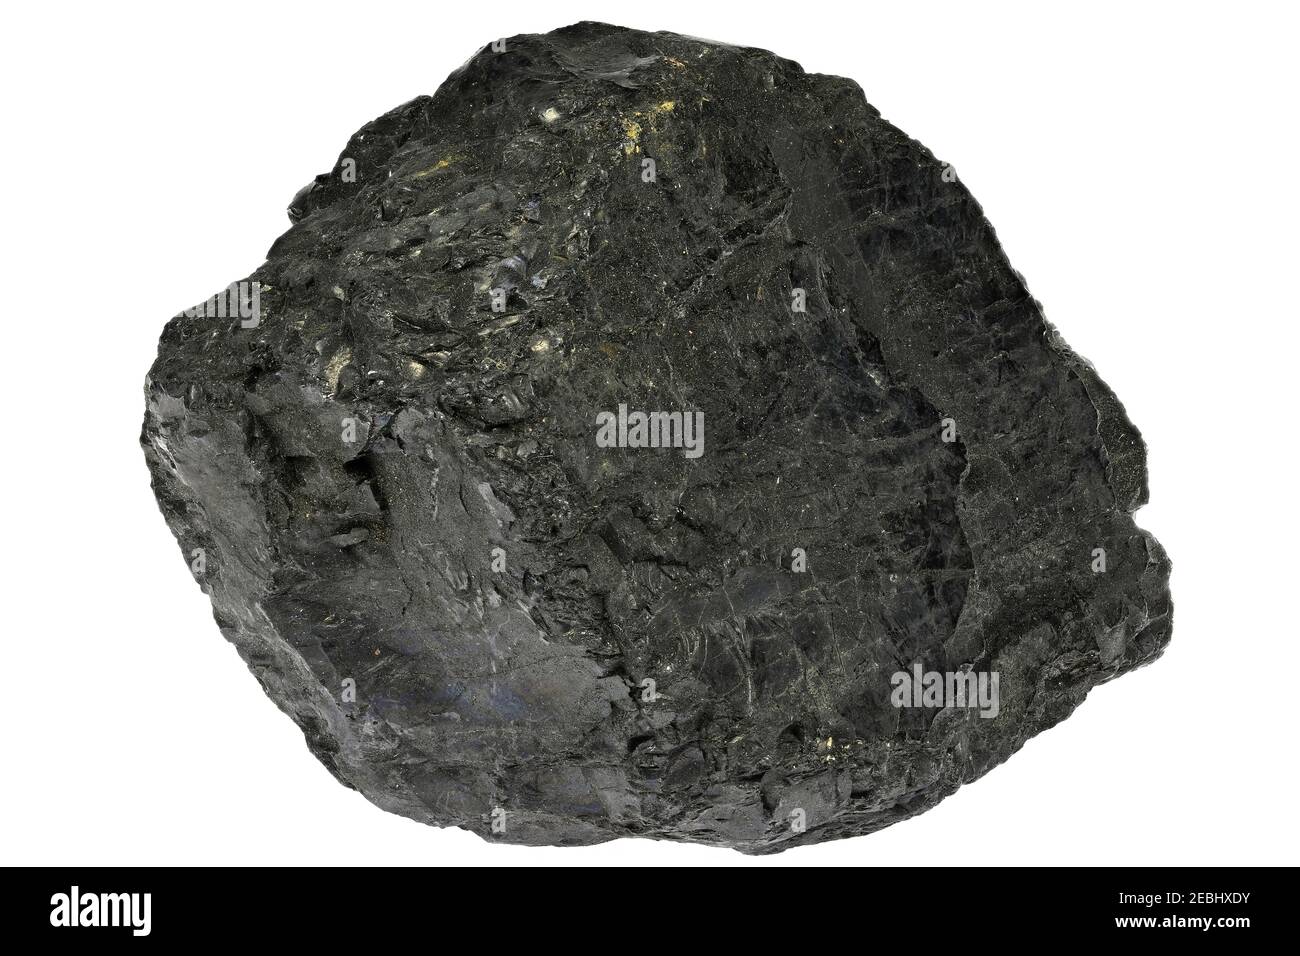 Carbón de antracita de Ibbenburen, Alemania aislado sobre fondo blanco Foto de stock